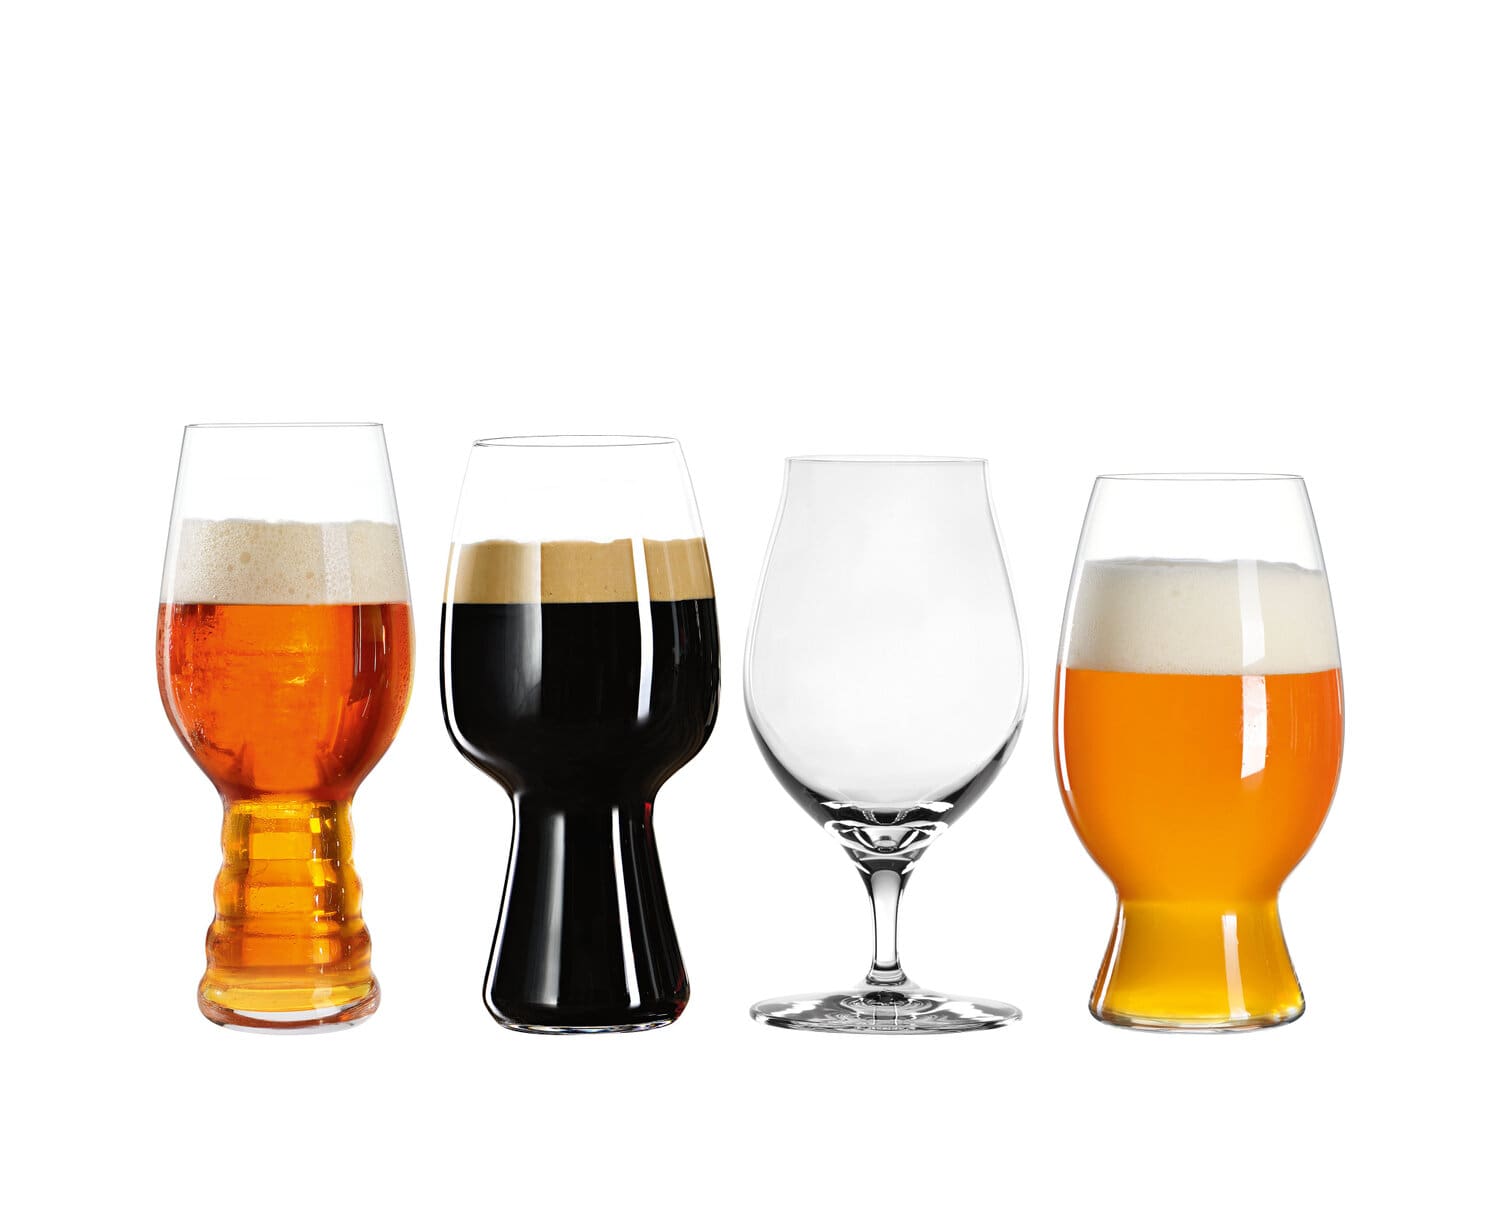 Spiegelau Набор пивных бокалов для дегустации 4 предмета Tasting Kit Craft Beer Glasses | https://grandposuda.com.ua